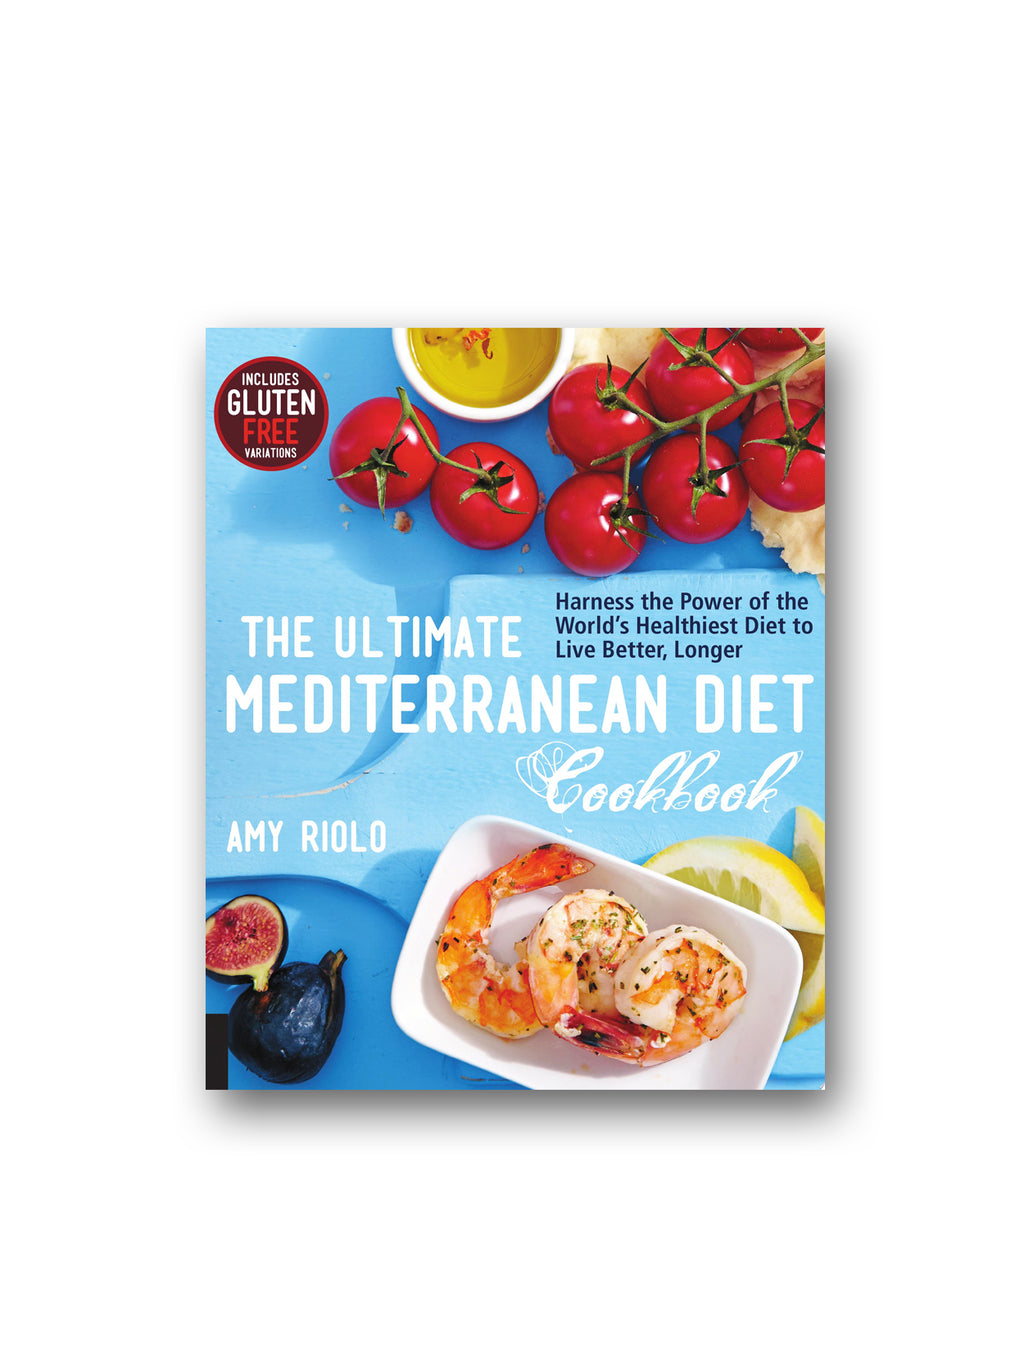 The Ultimate Mediterranean Diet Cookbook